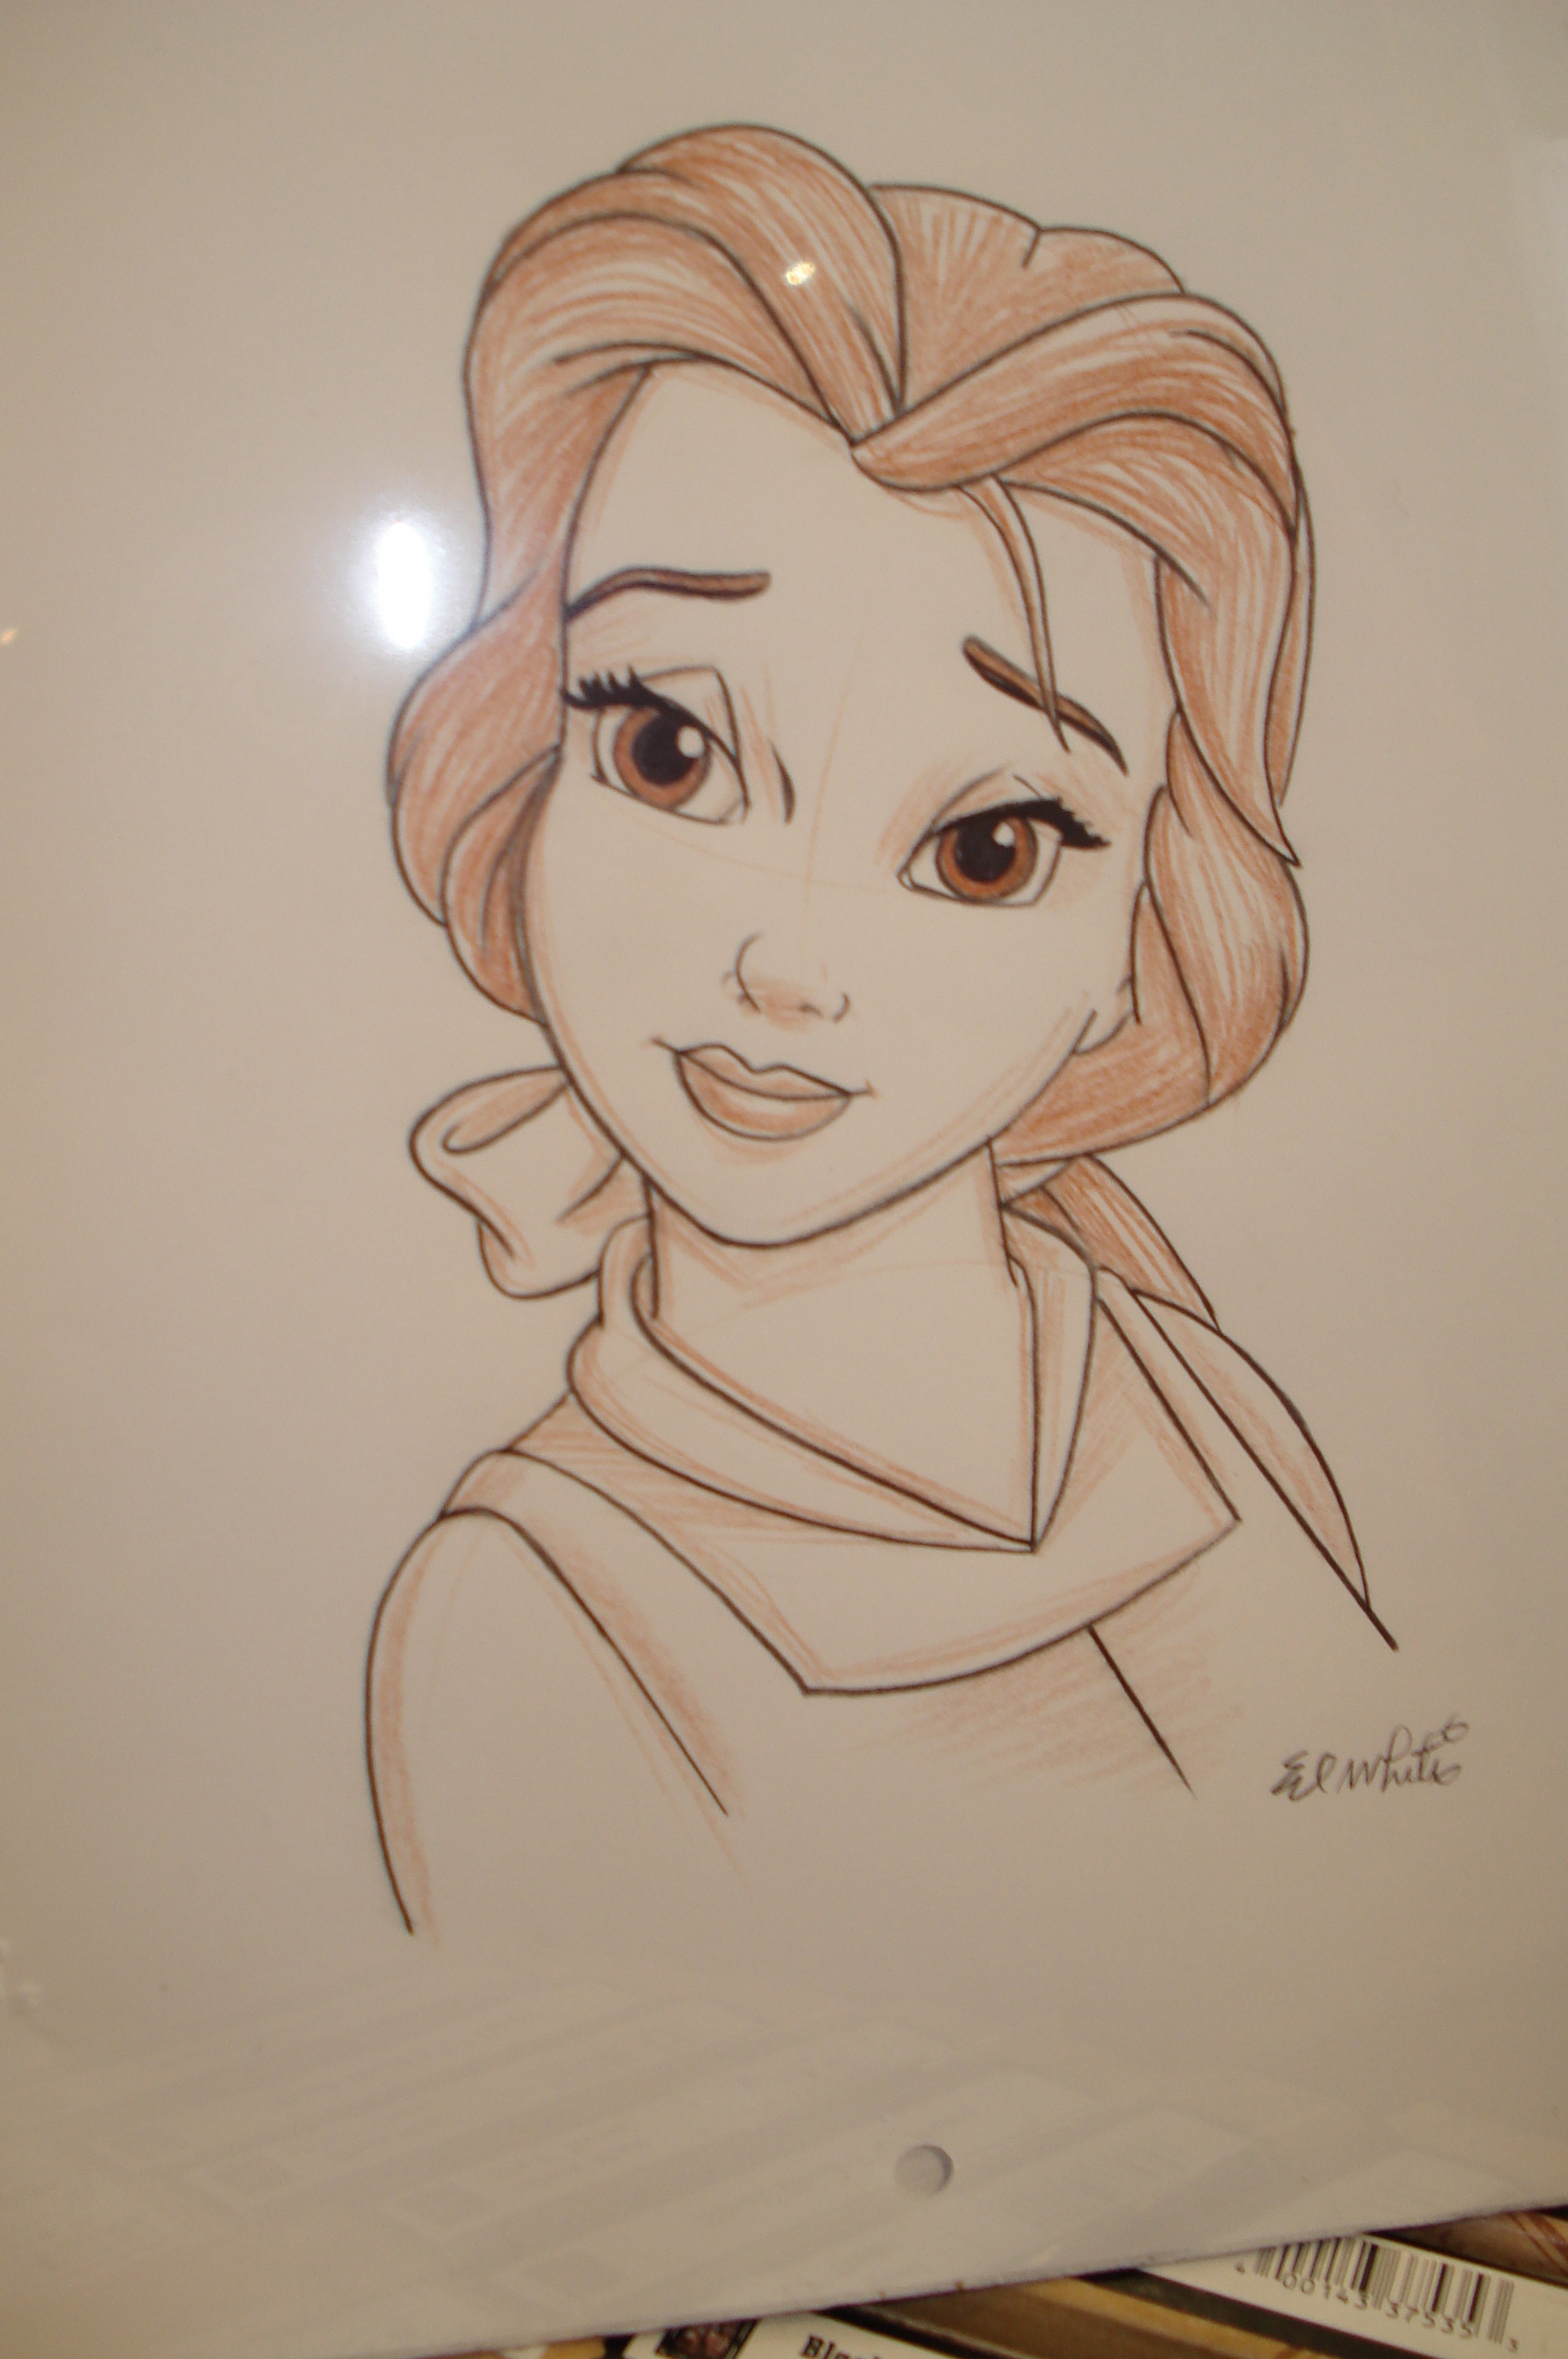 Easy Disney Princess Drawing at GetDrawings | Free download